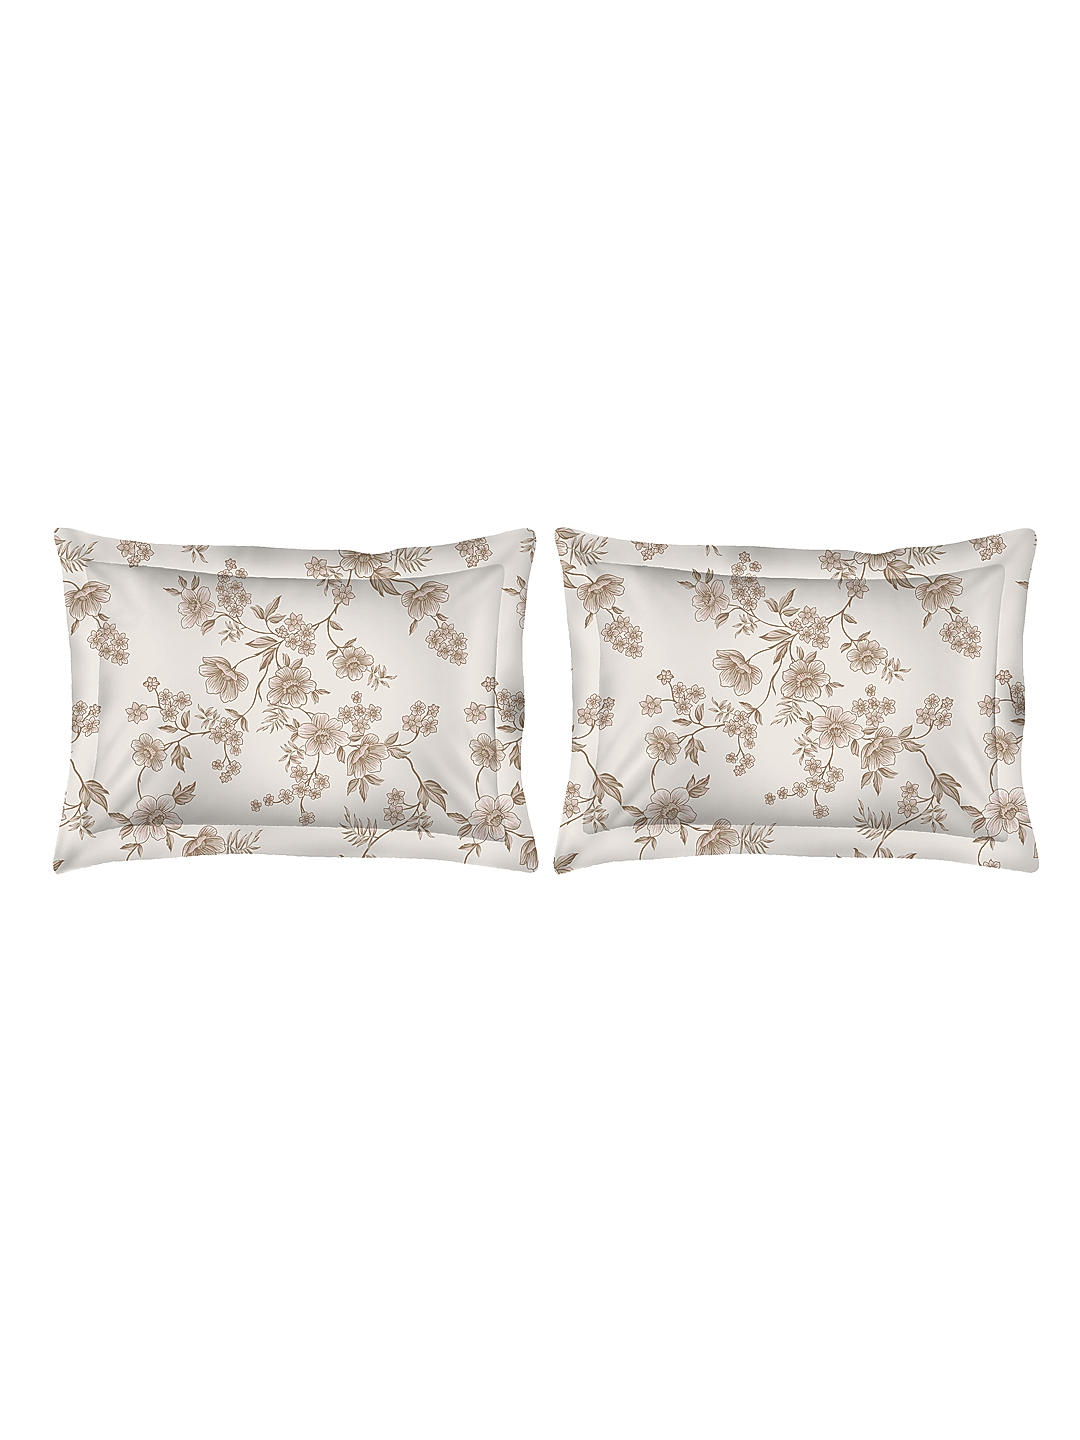 Cottage Garden-2 300 TC 100% cotton Ultra Fine Beige Colored Floral Print King Bed Sheet Set